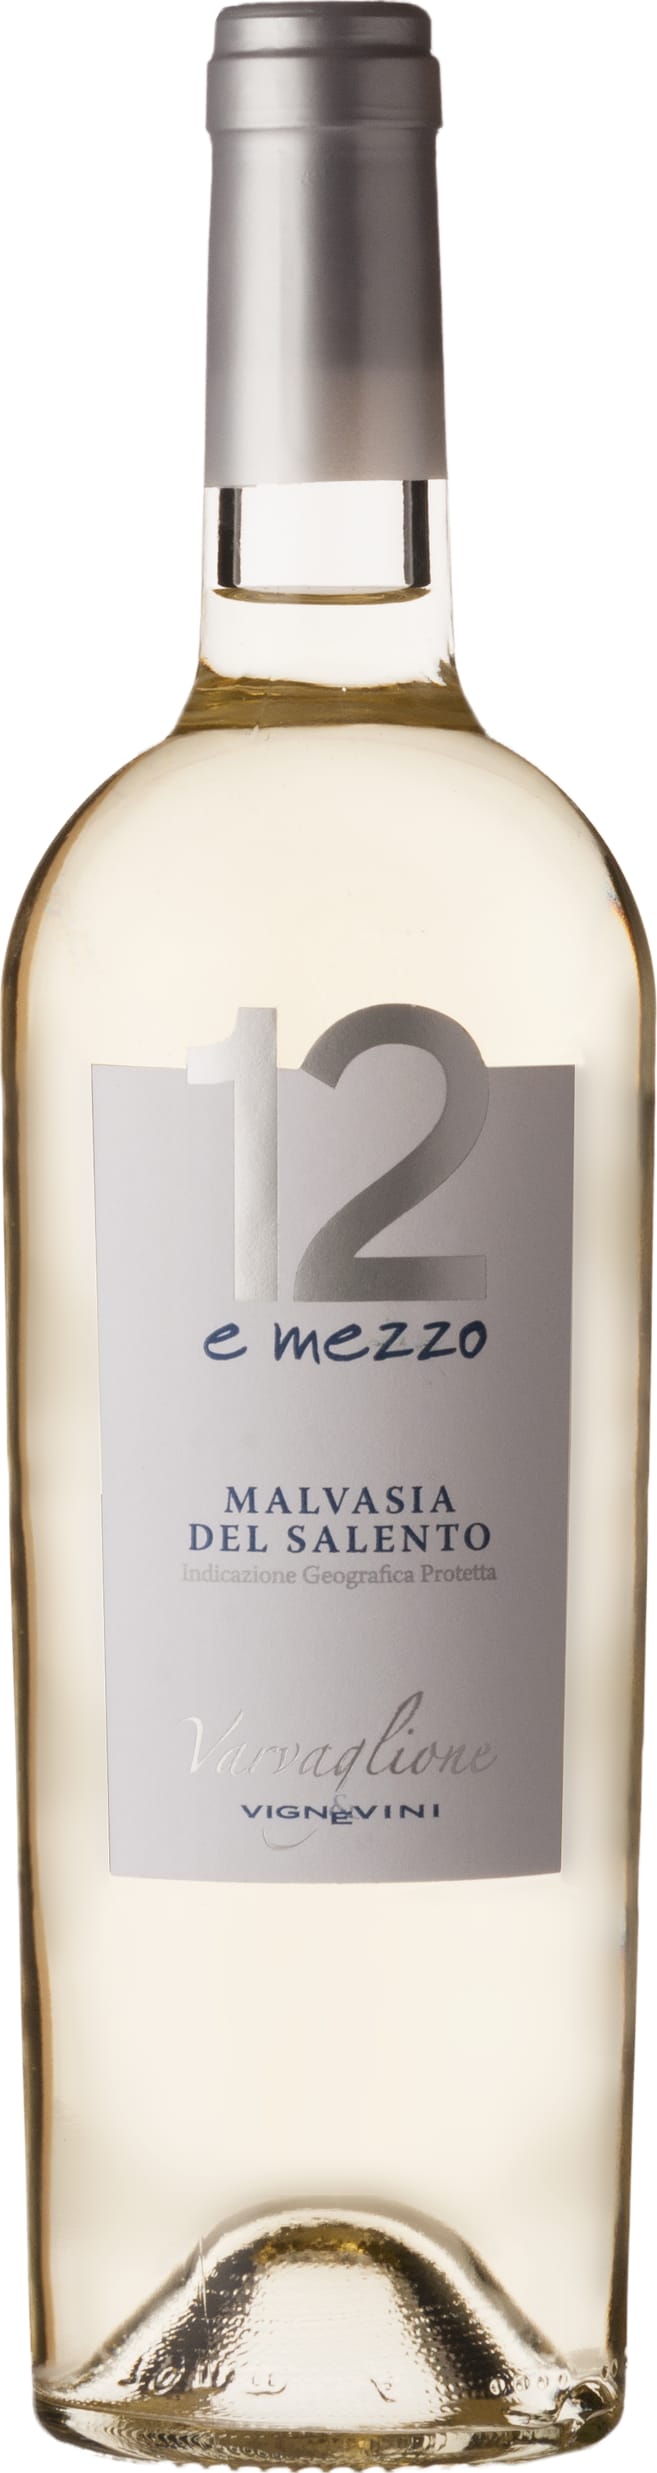 Varvaglione Malvasia del Salento 2022 75cl - Buy Varvaglione Wines from GREAT WINES DIRECT wine shop